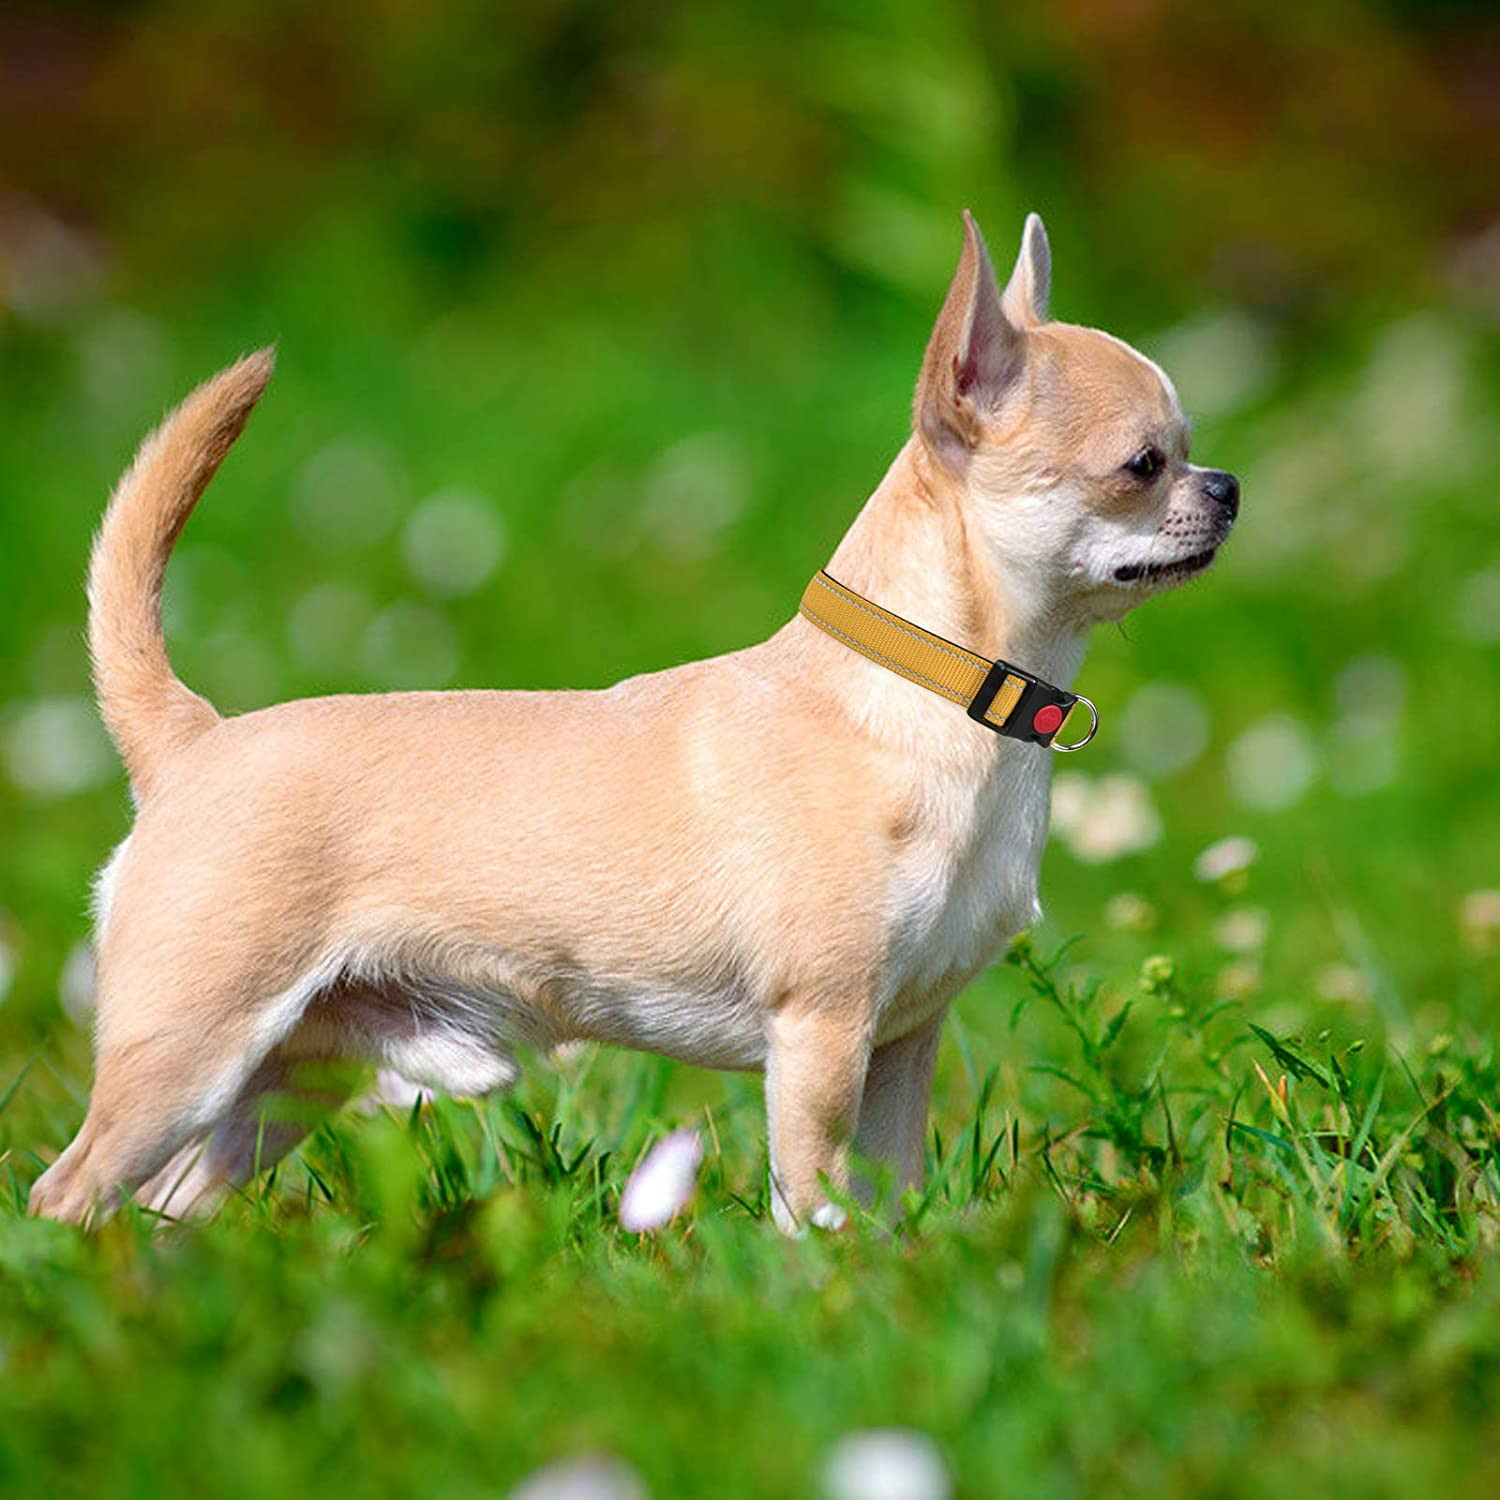 Collar Nylon Reflectante Neopreno Forrado Ajustable para Perros Cachorro Gris Taglory Collar Perro 